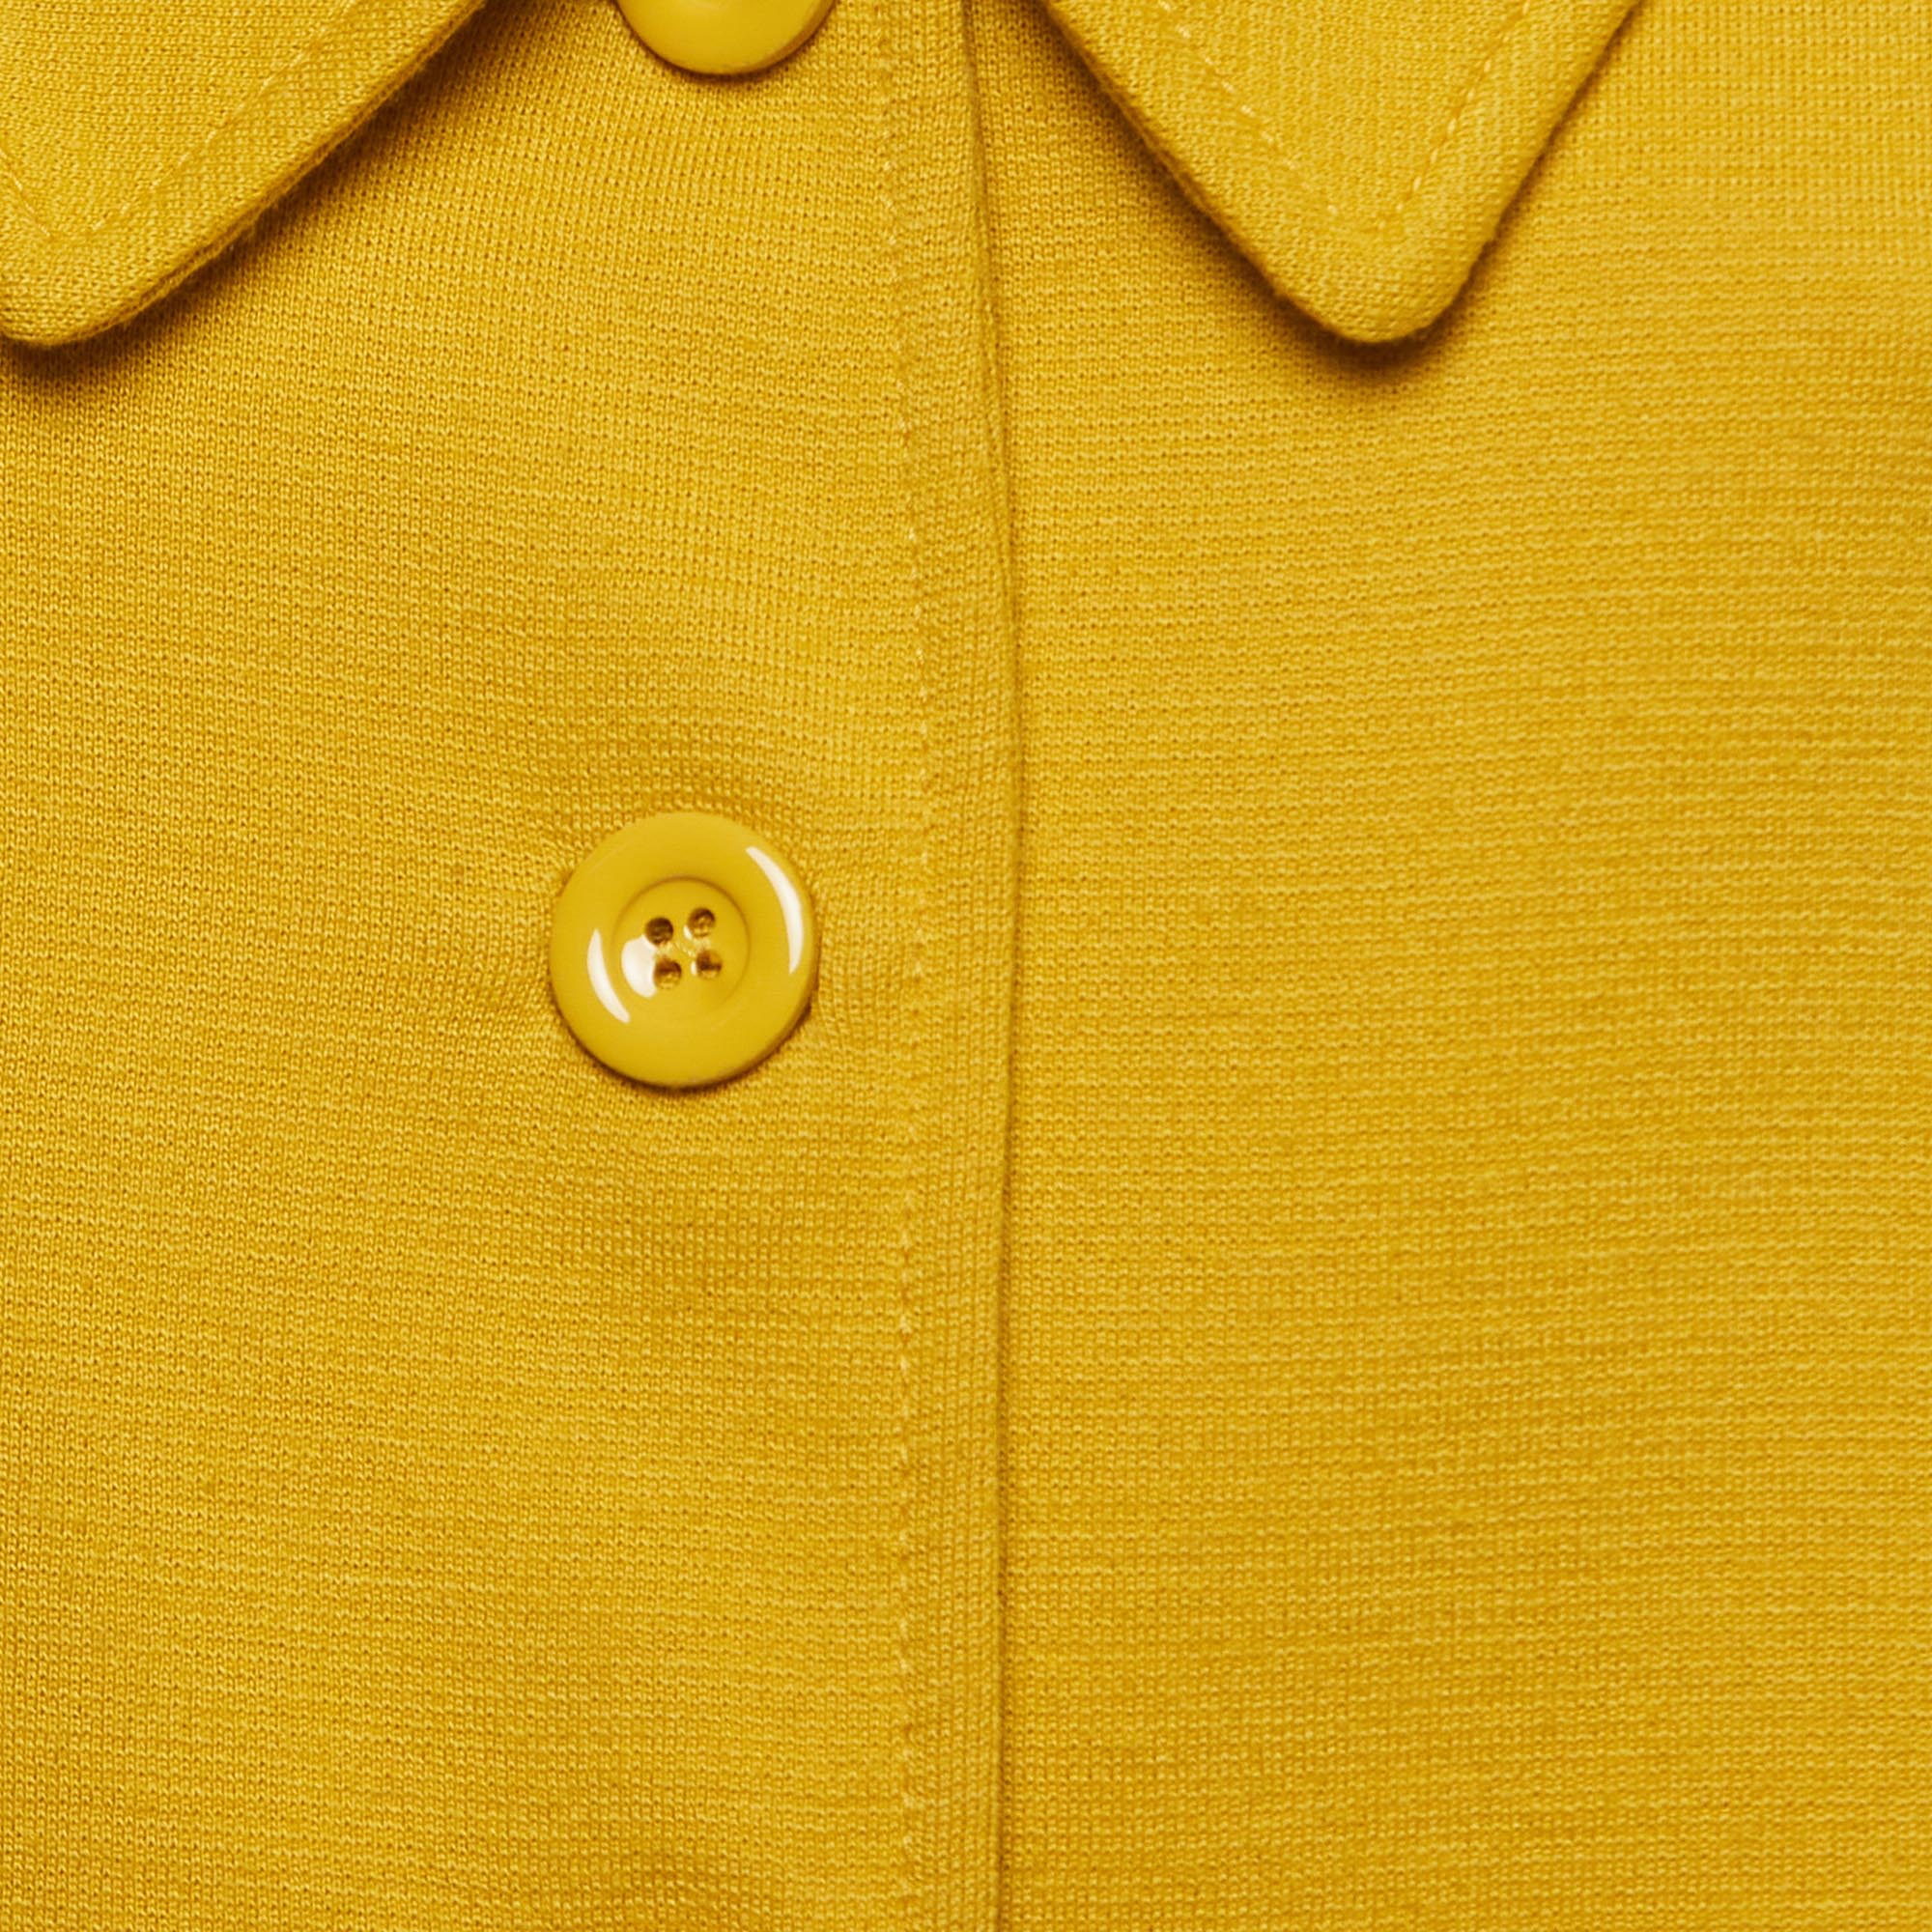 Love Moschino Mustard Yellow Wool Blend Buttoned Jacket S